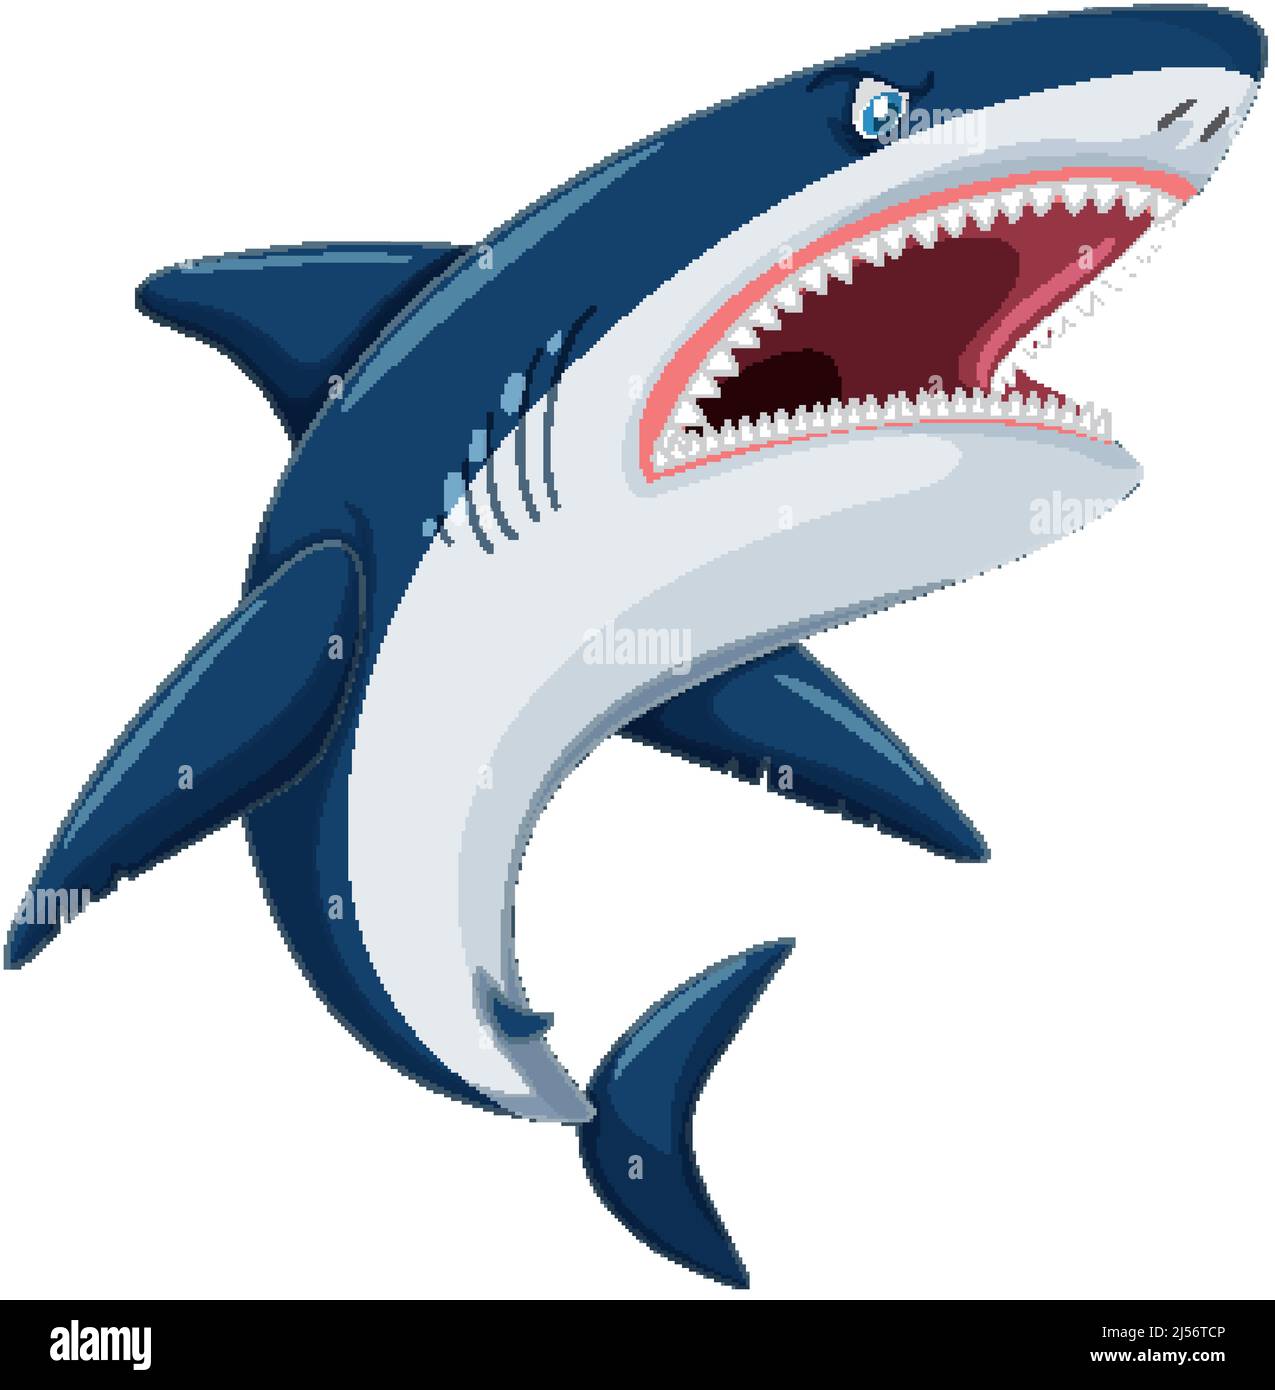 Aggressive great white shark cartoon illustration Stock Vector Image ...